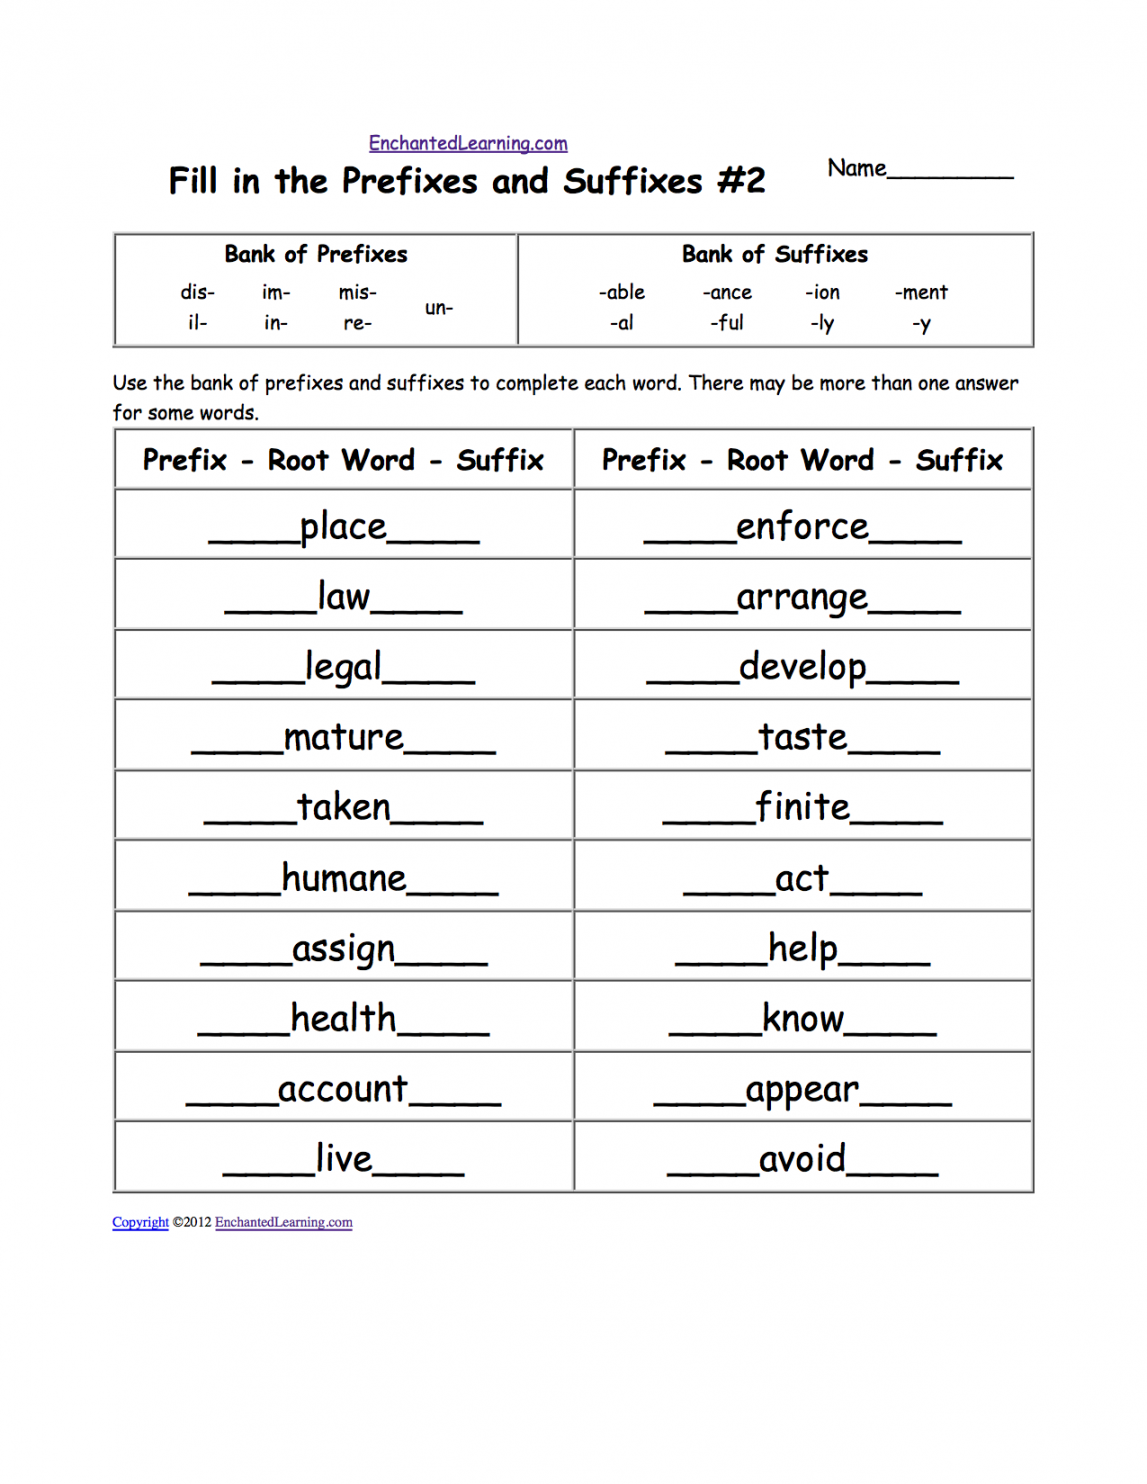 Prefixes and Suffixes: EnchantedLearning